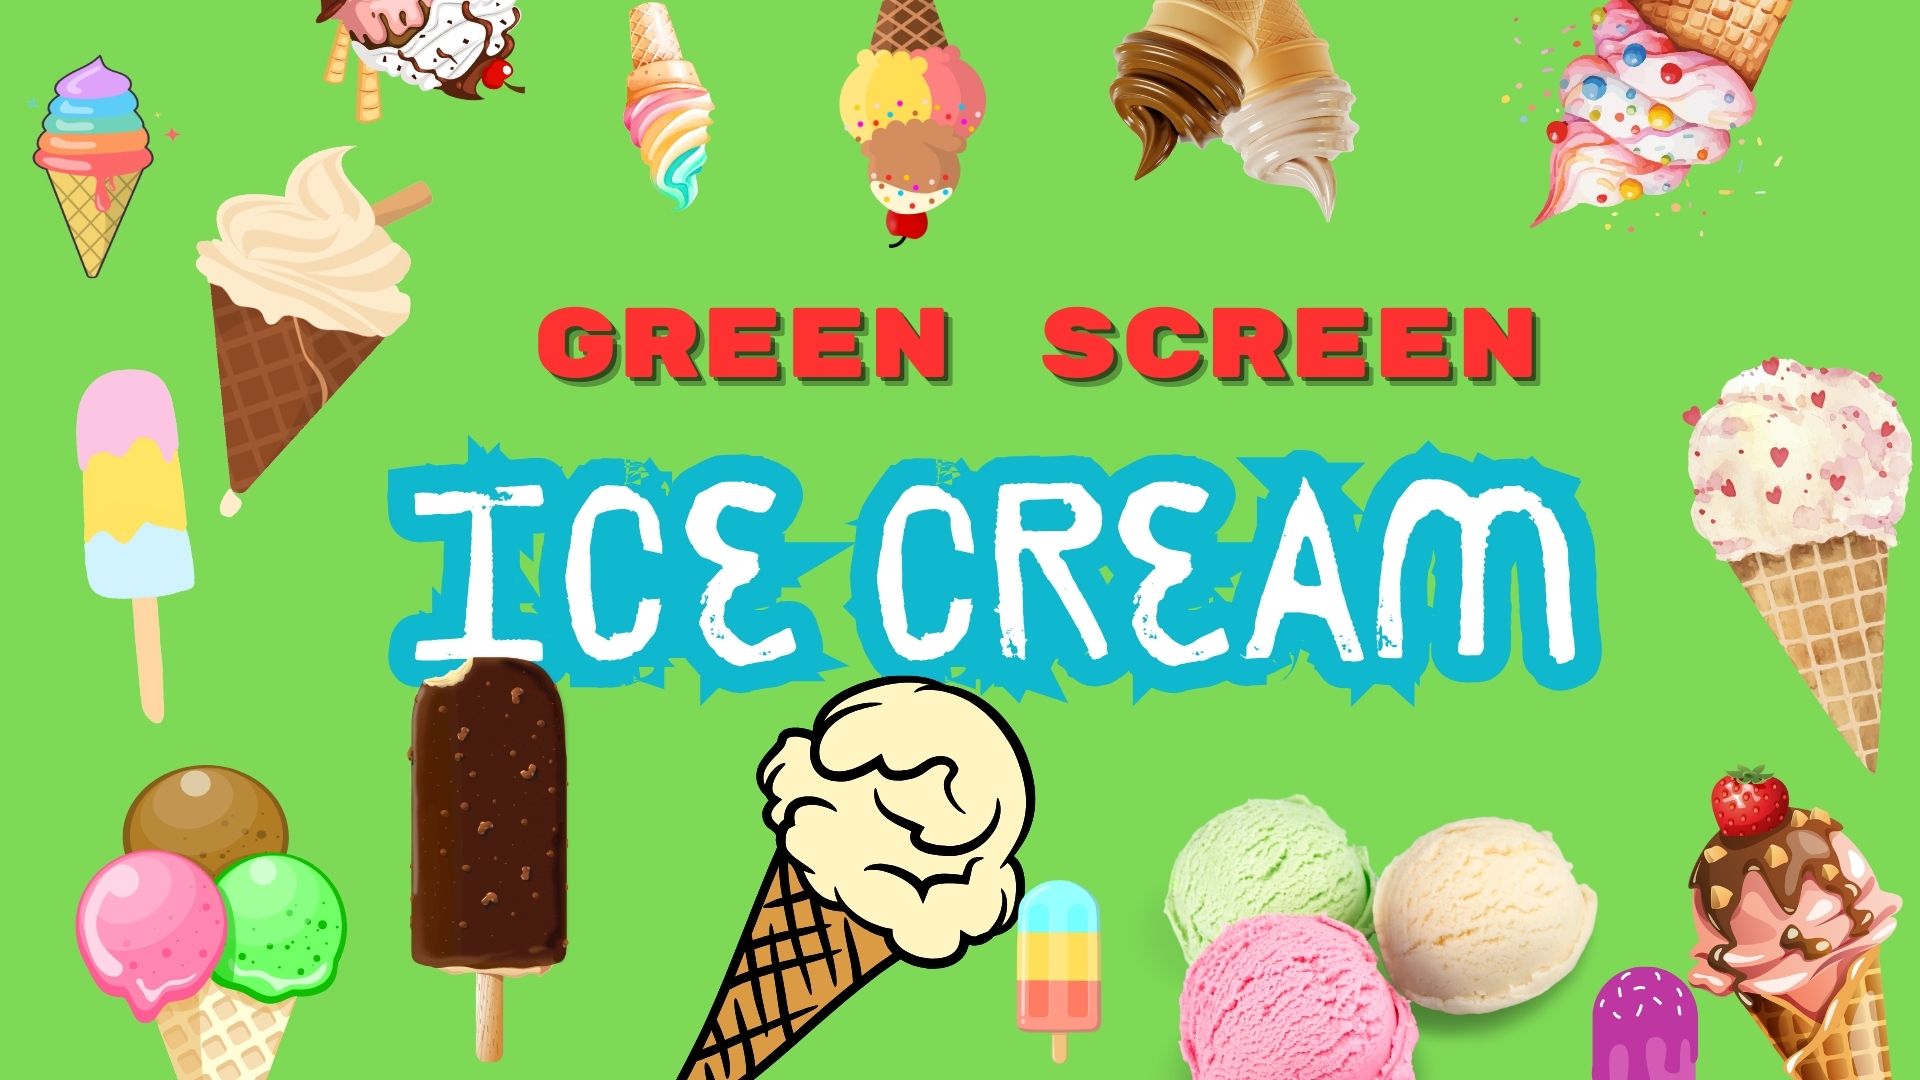 ICE CREAM Green screen 4K - Футажи Мороженное